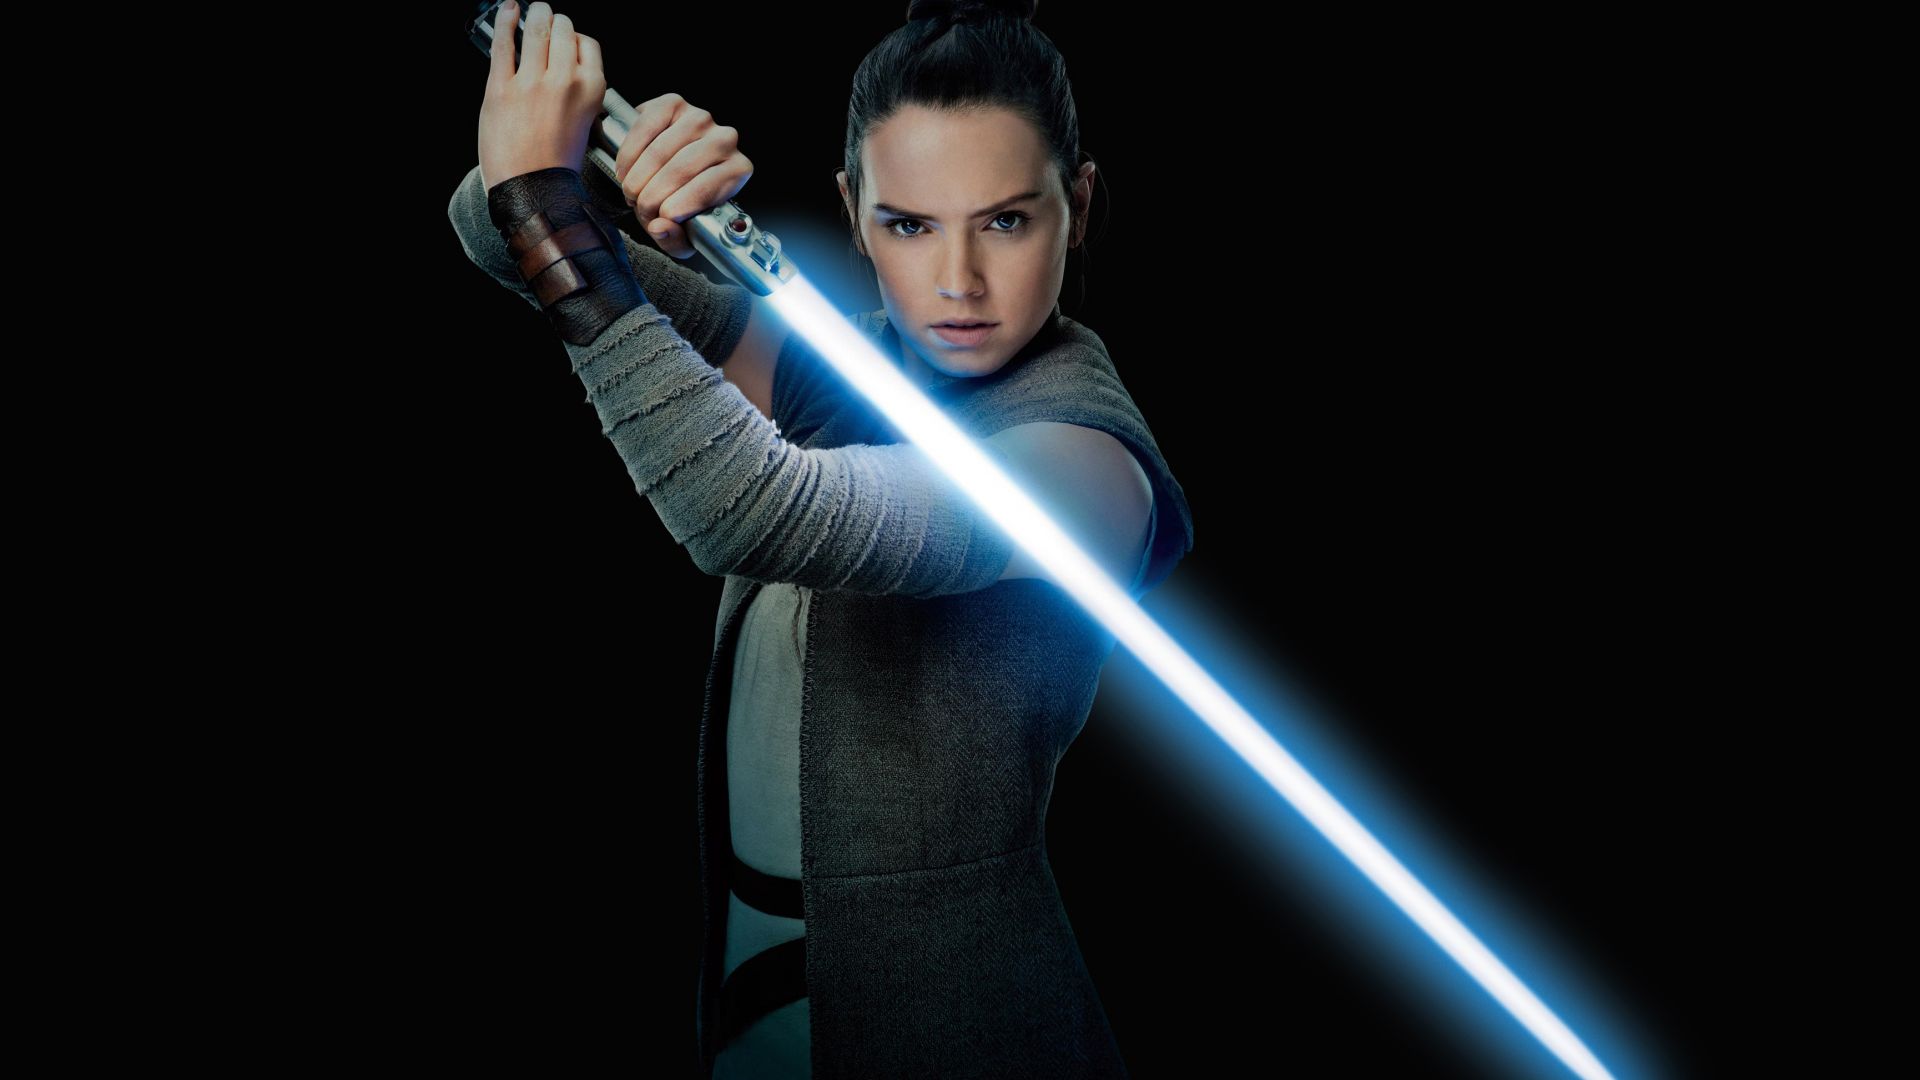 Wallpaper Star Wars: The Last Jedi, actress, sword, movie